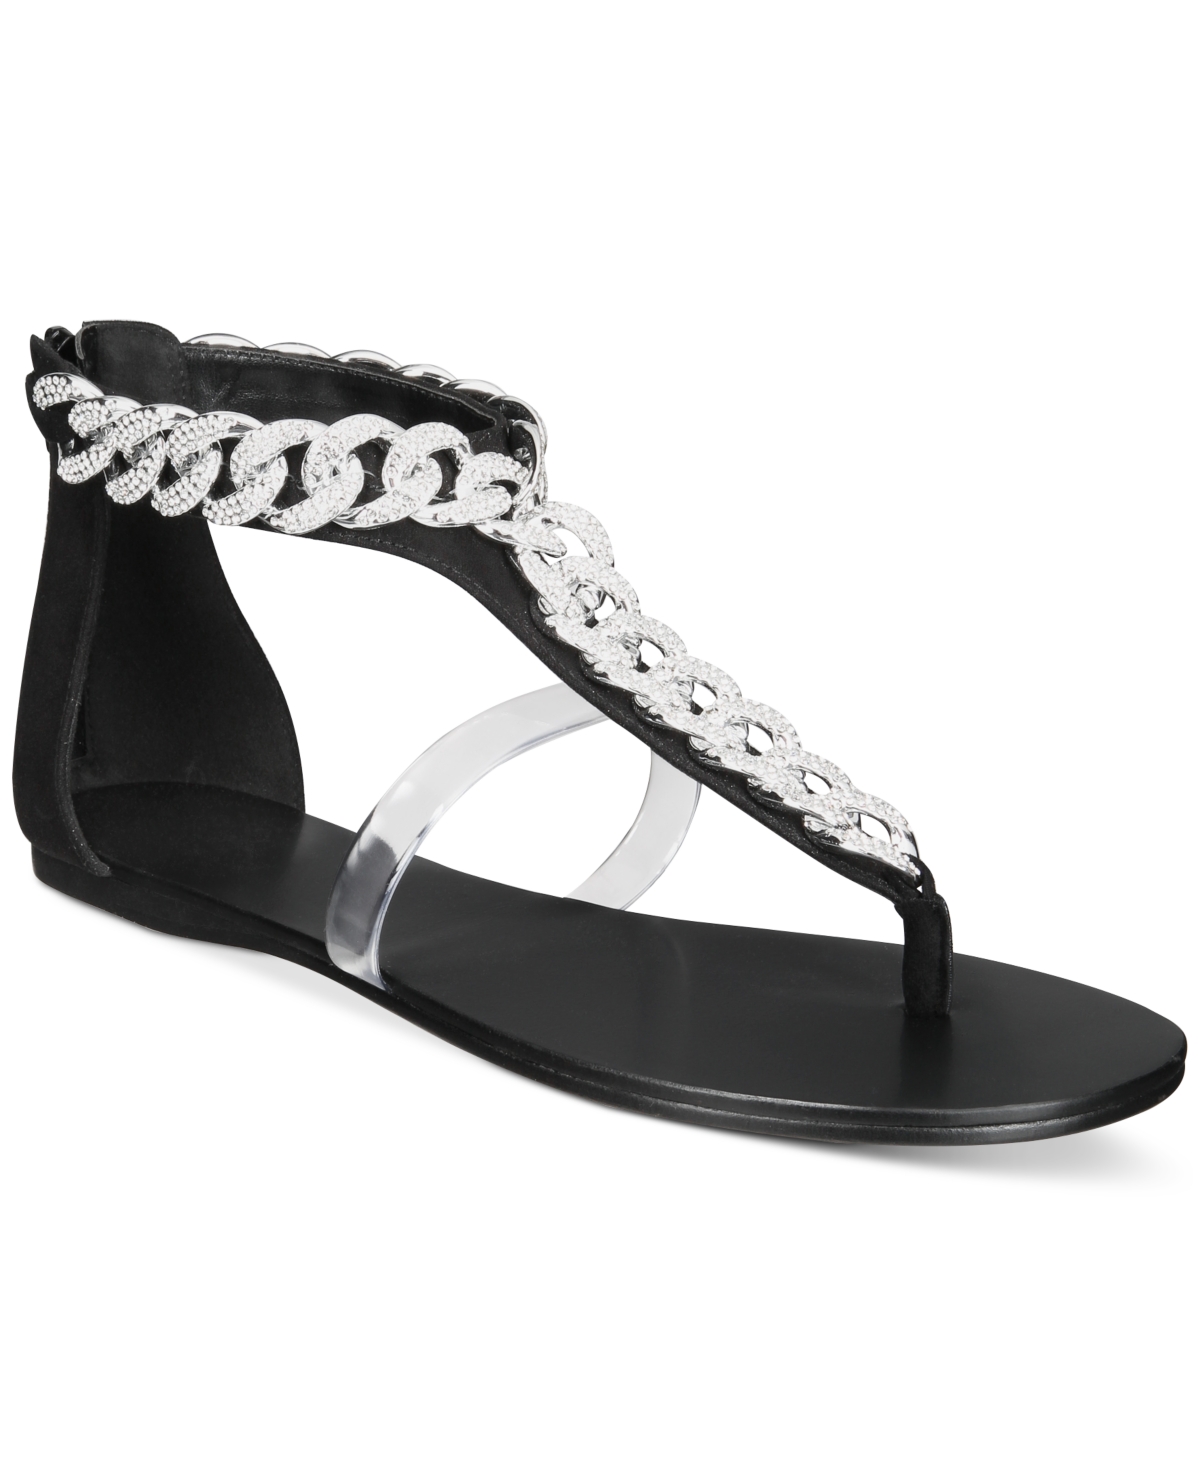 Aurora Women's Crystal Chain Flat Sandals - Silver